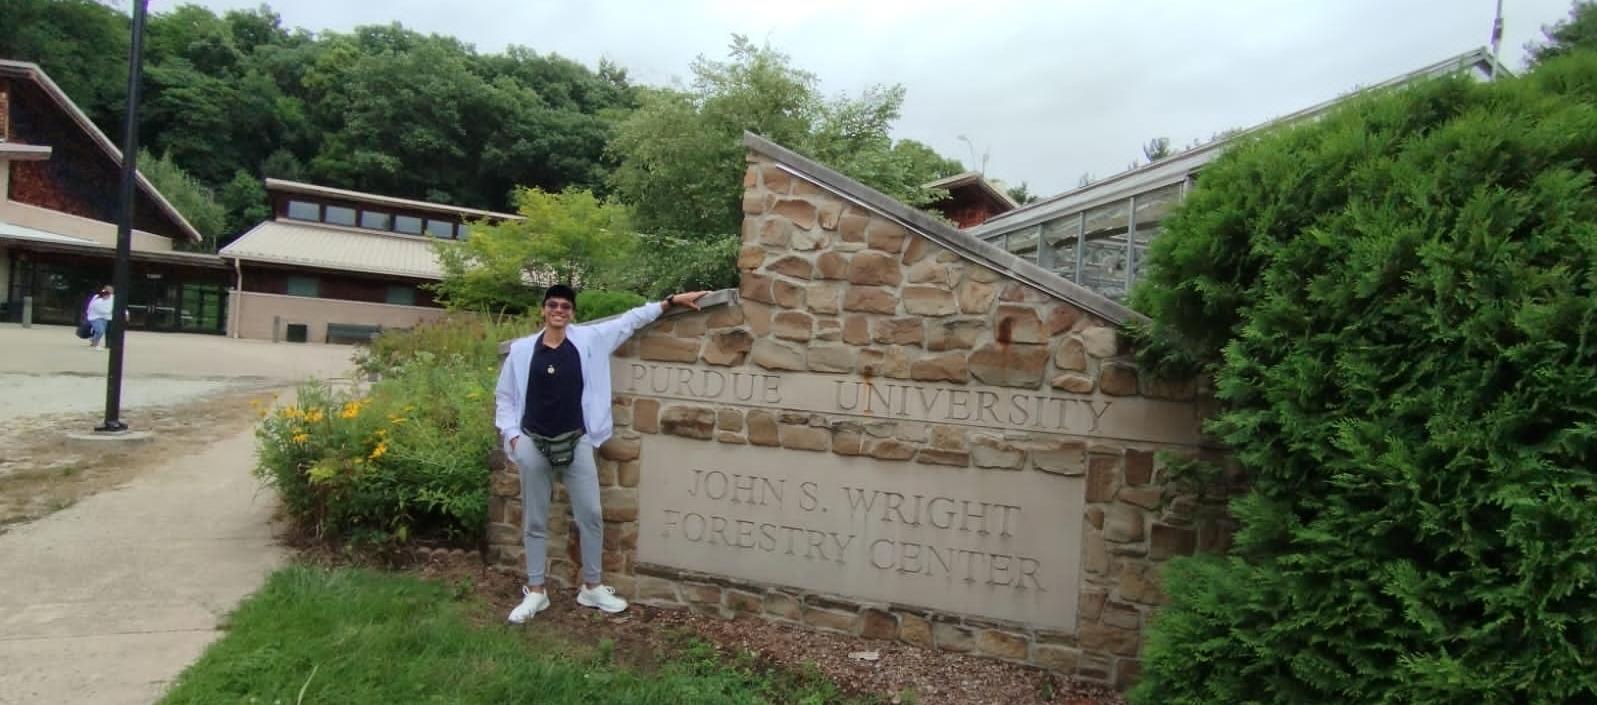 Joel Flórez posando en la entrada de Purdue University.